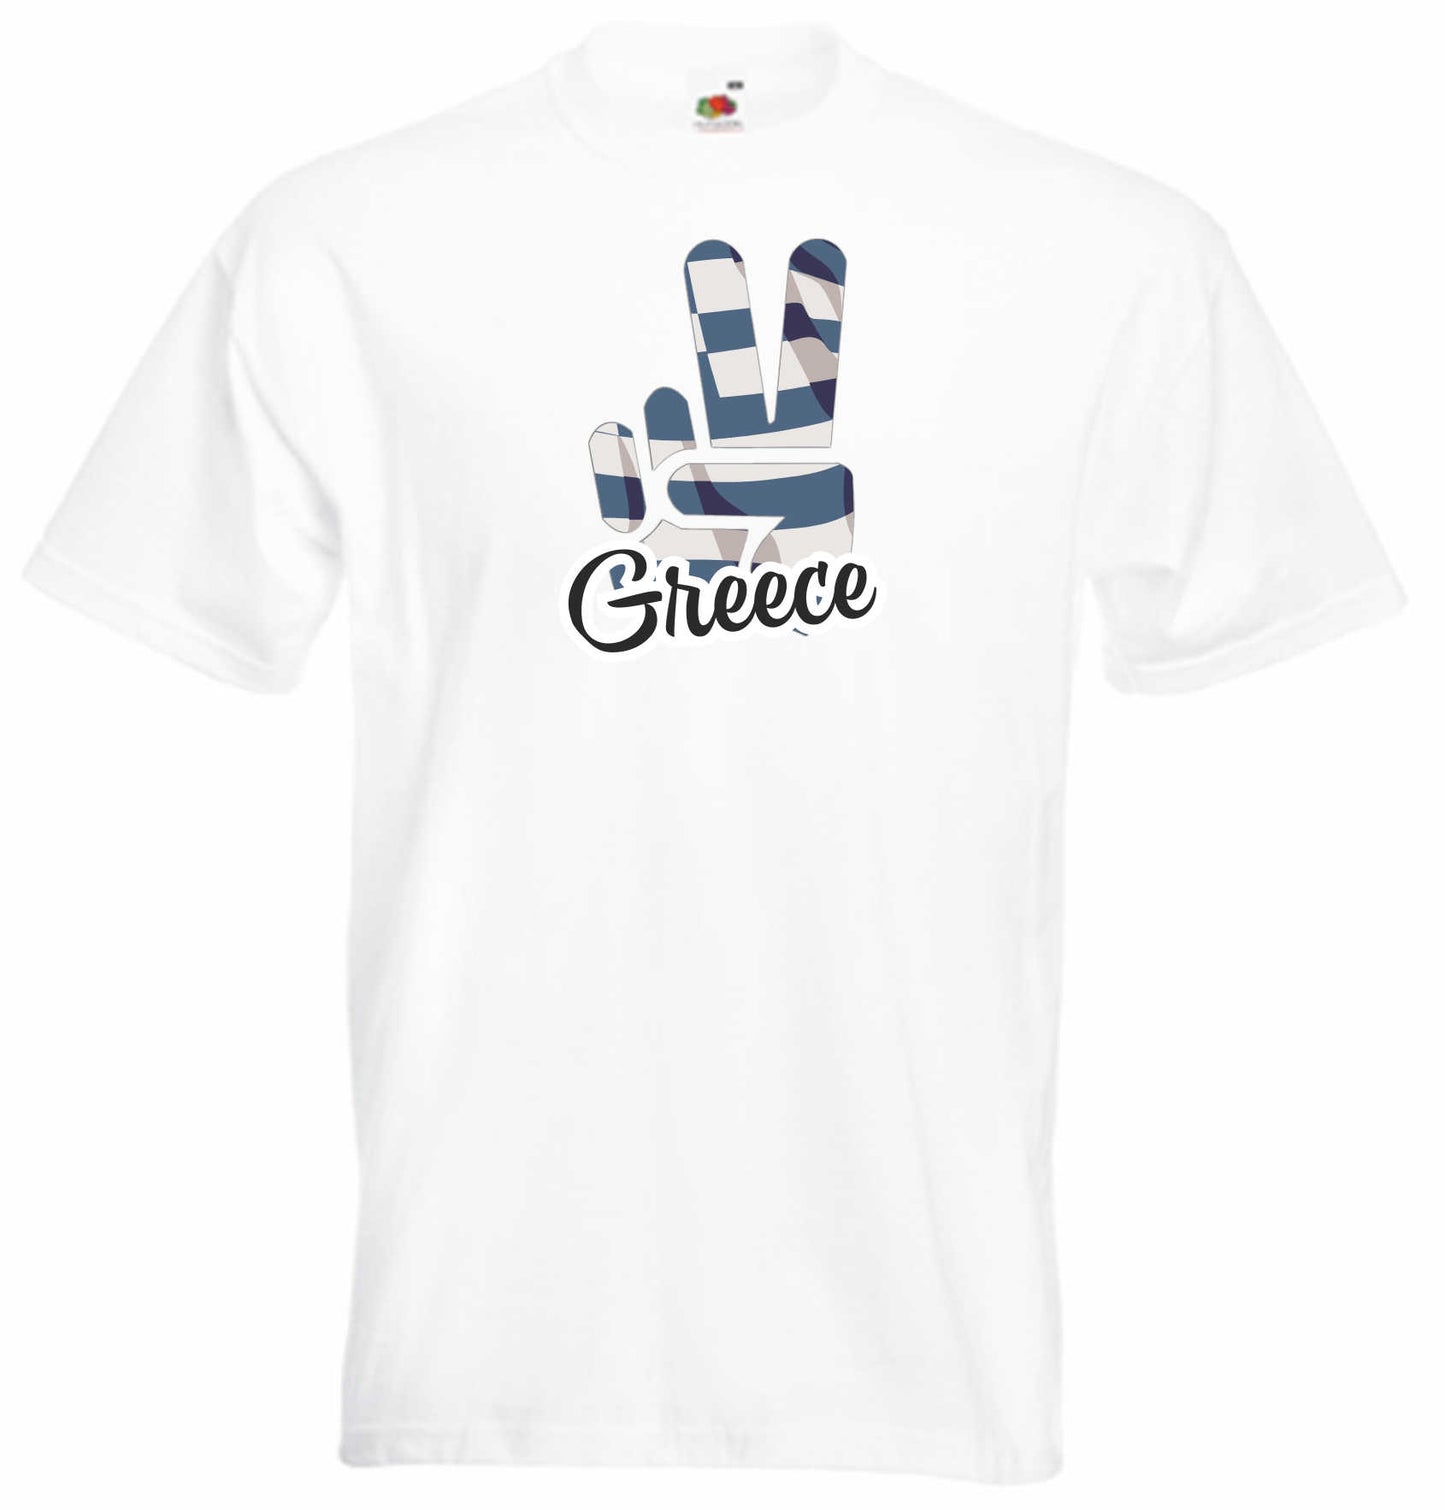 T-Shirt Herren - Victory - Flagge / Fahne - Greece - Sieg